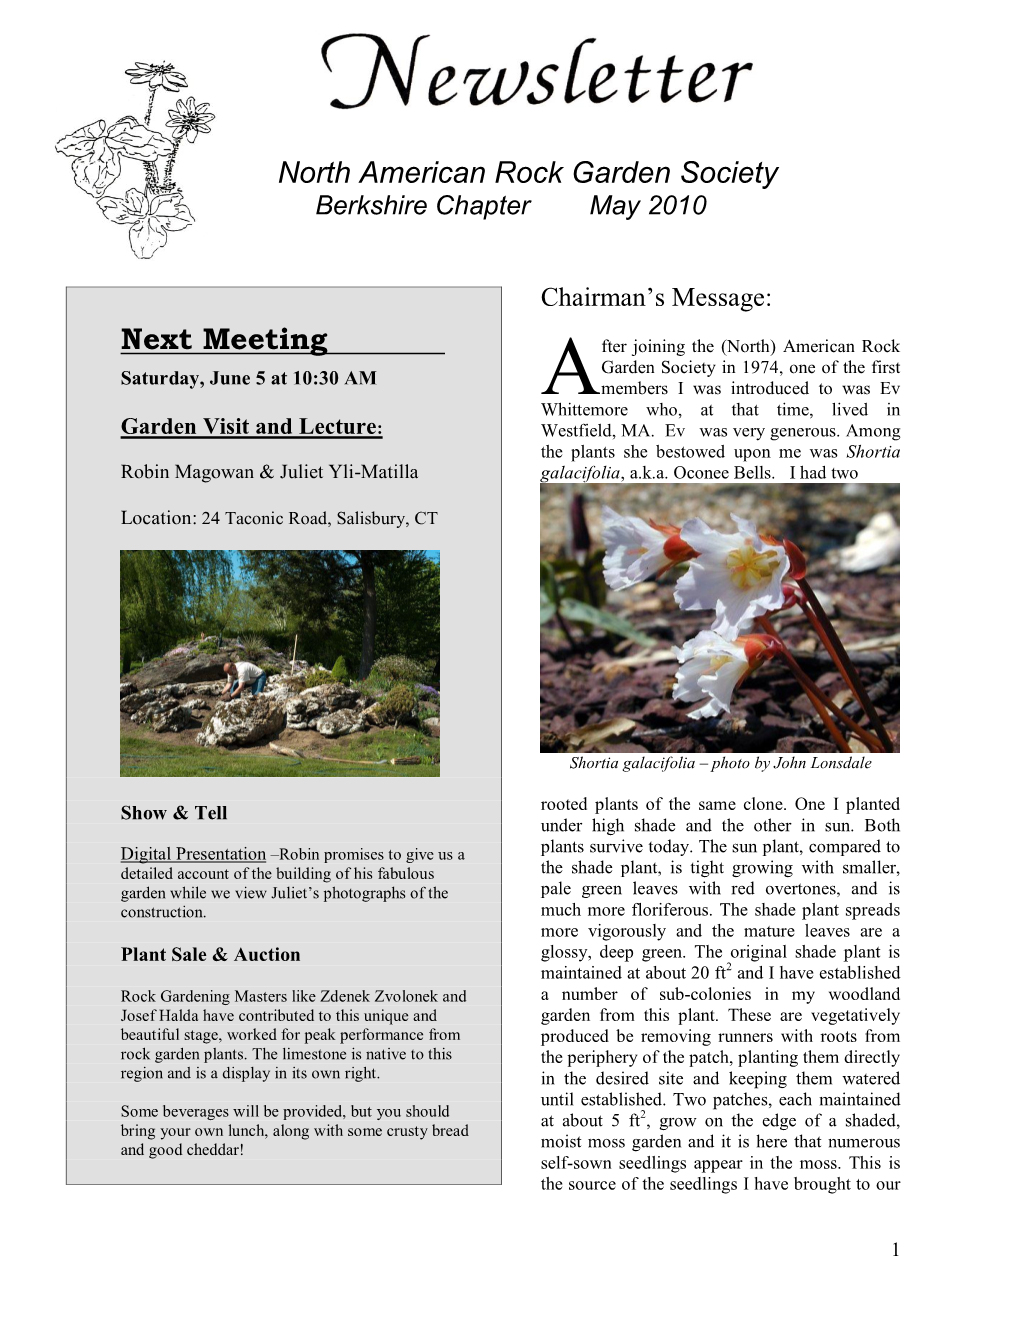 North American Rock Garden Society Next Meeting